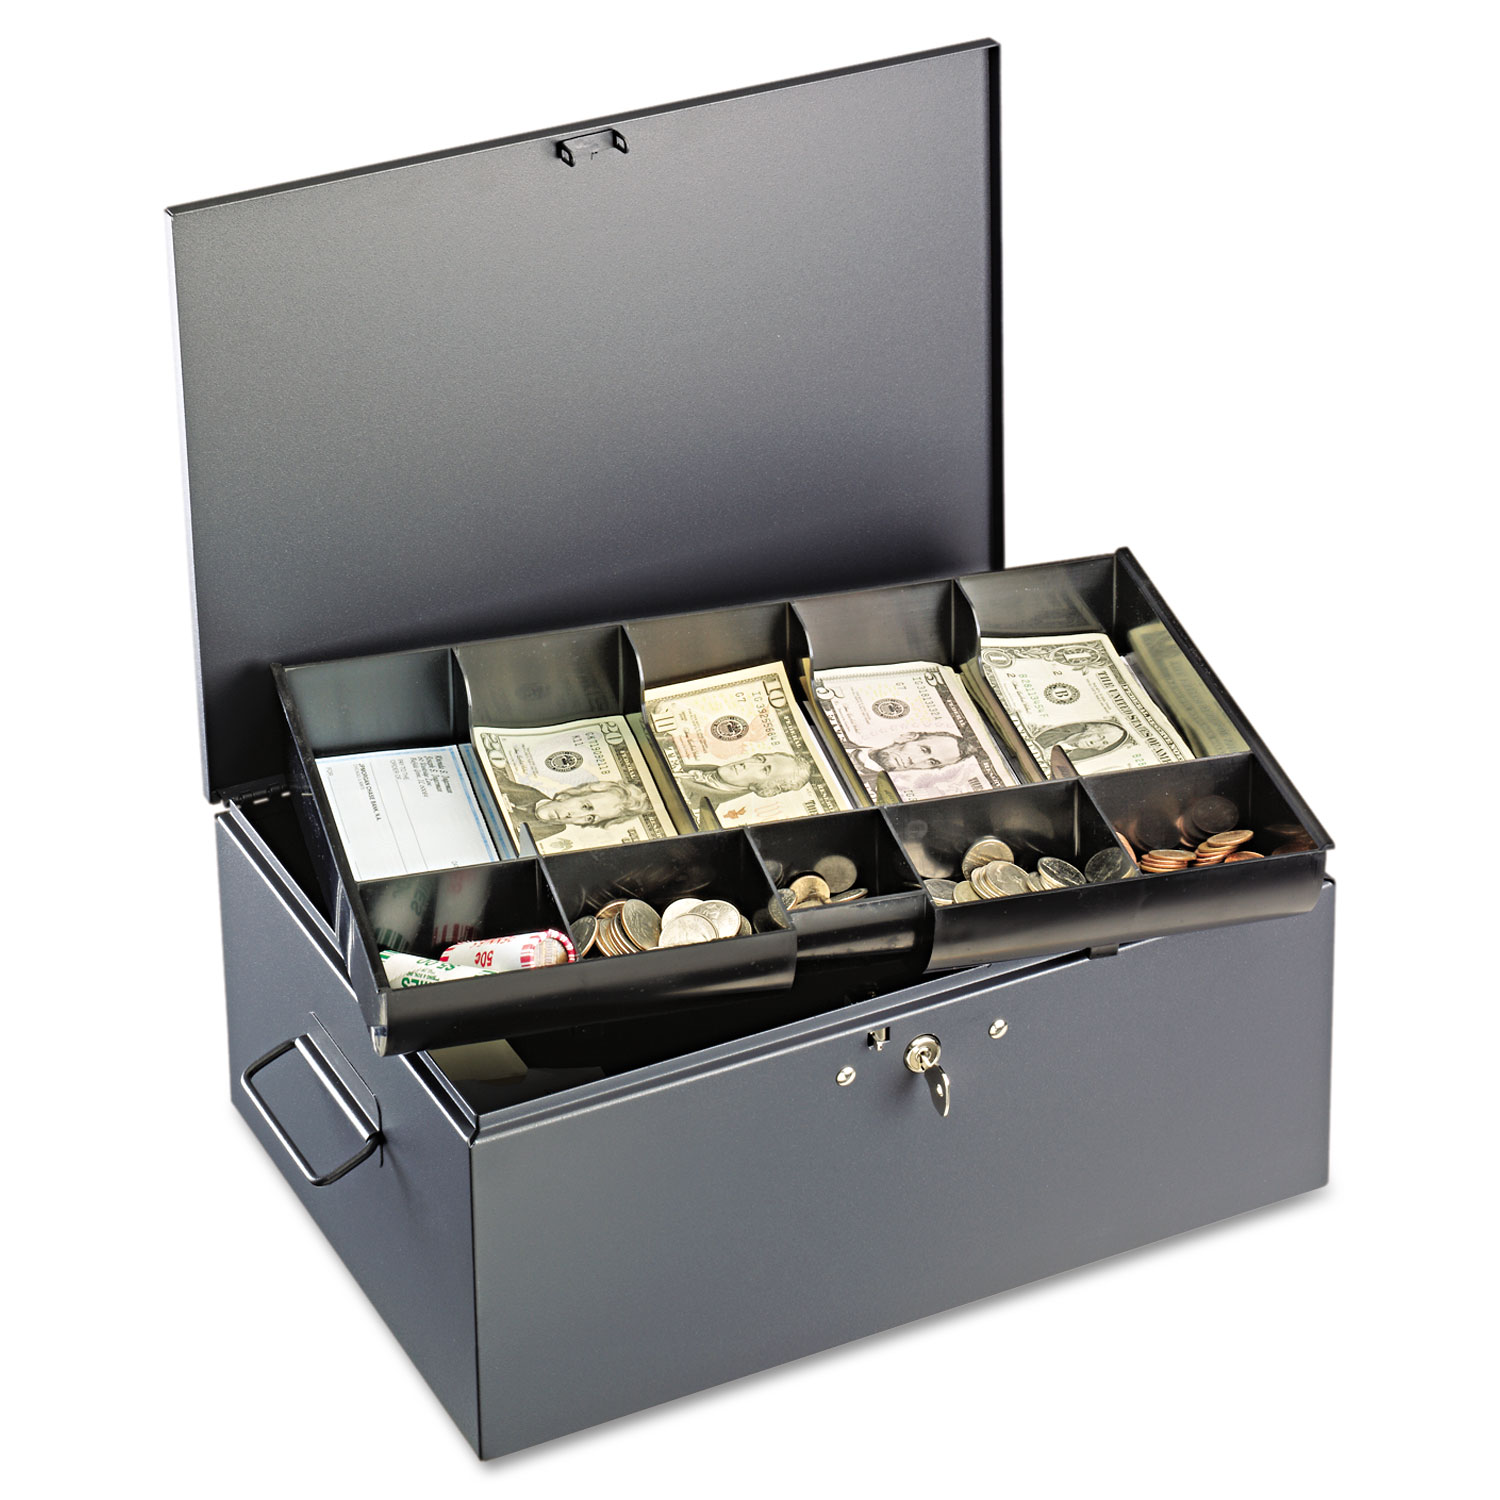  SteelMaster 221F15TGRA Extra Large Cash Box with Handles, Key Lock, Gray (MMF221F15TGRA) 